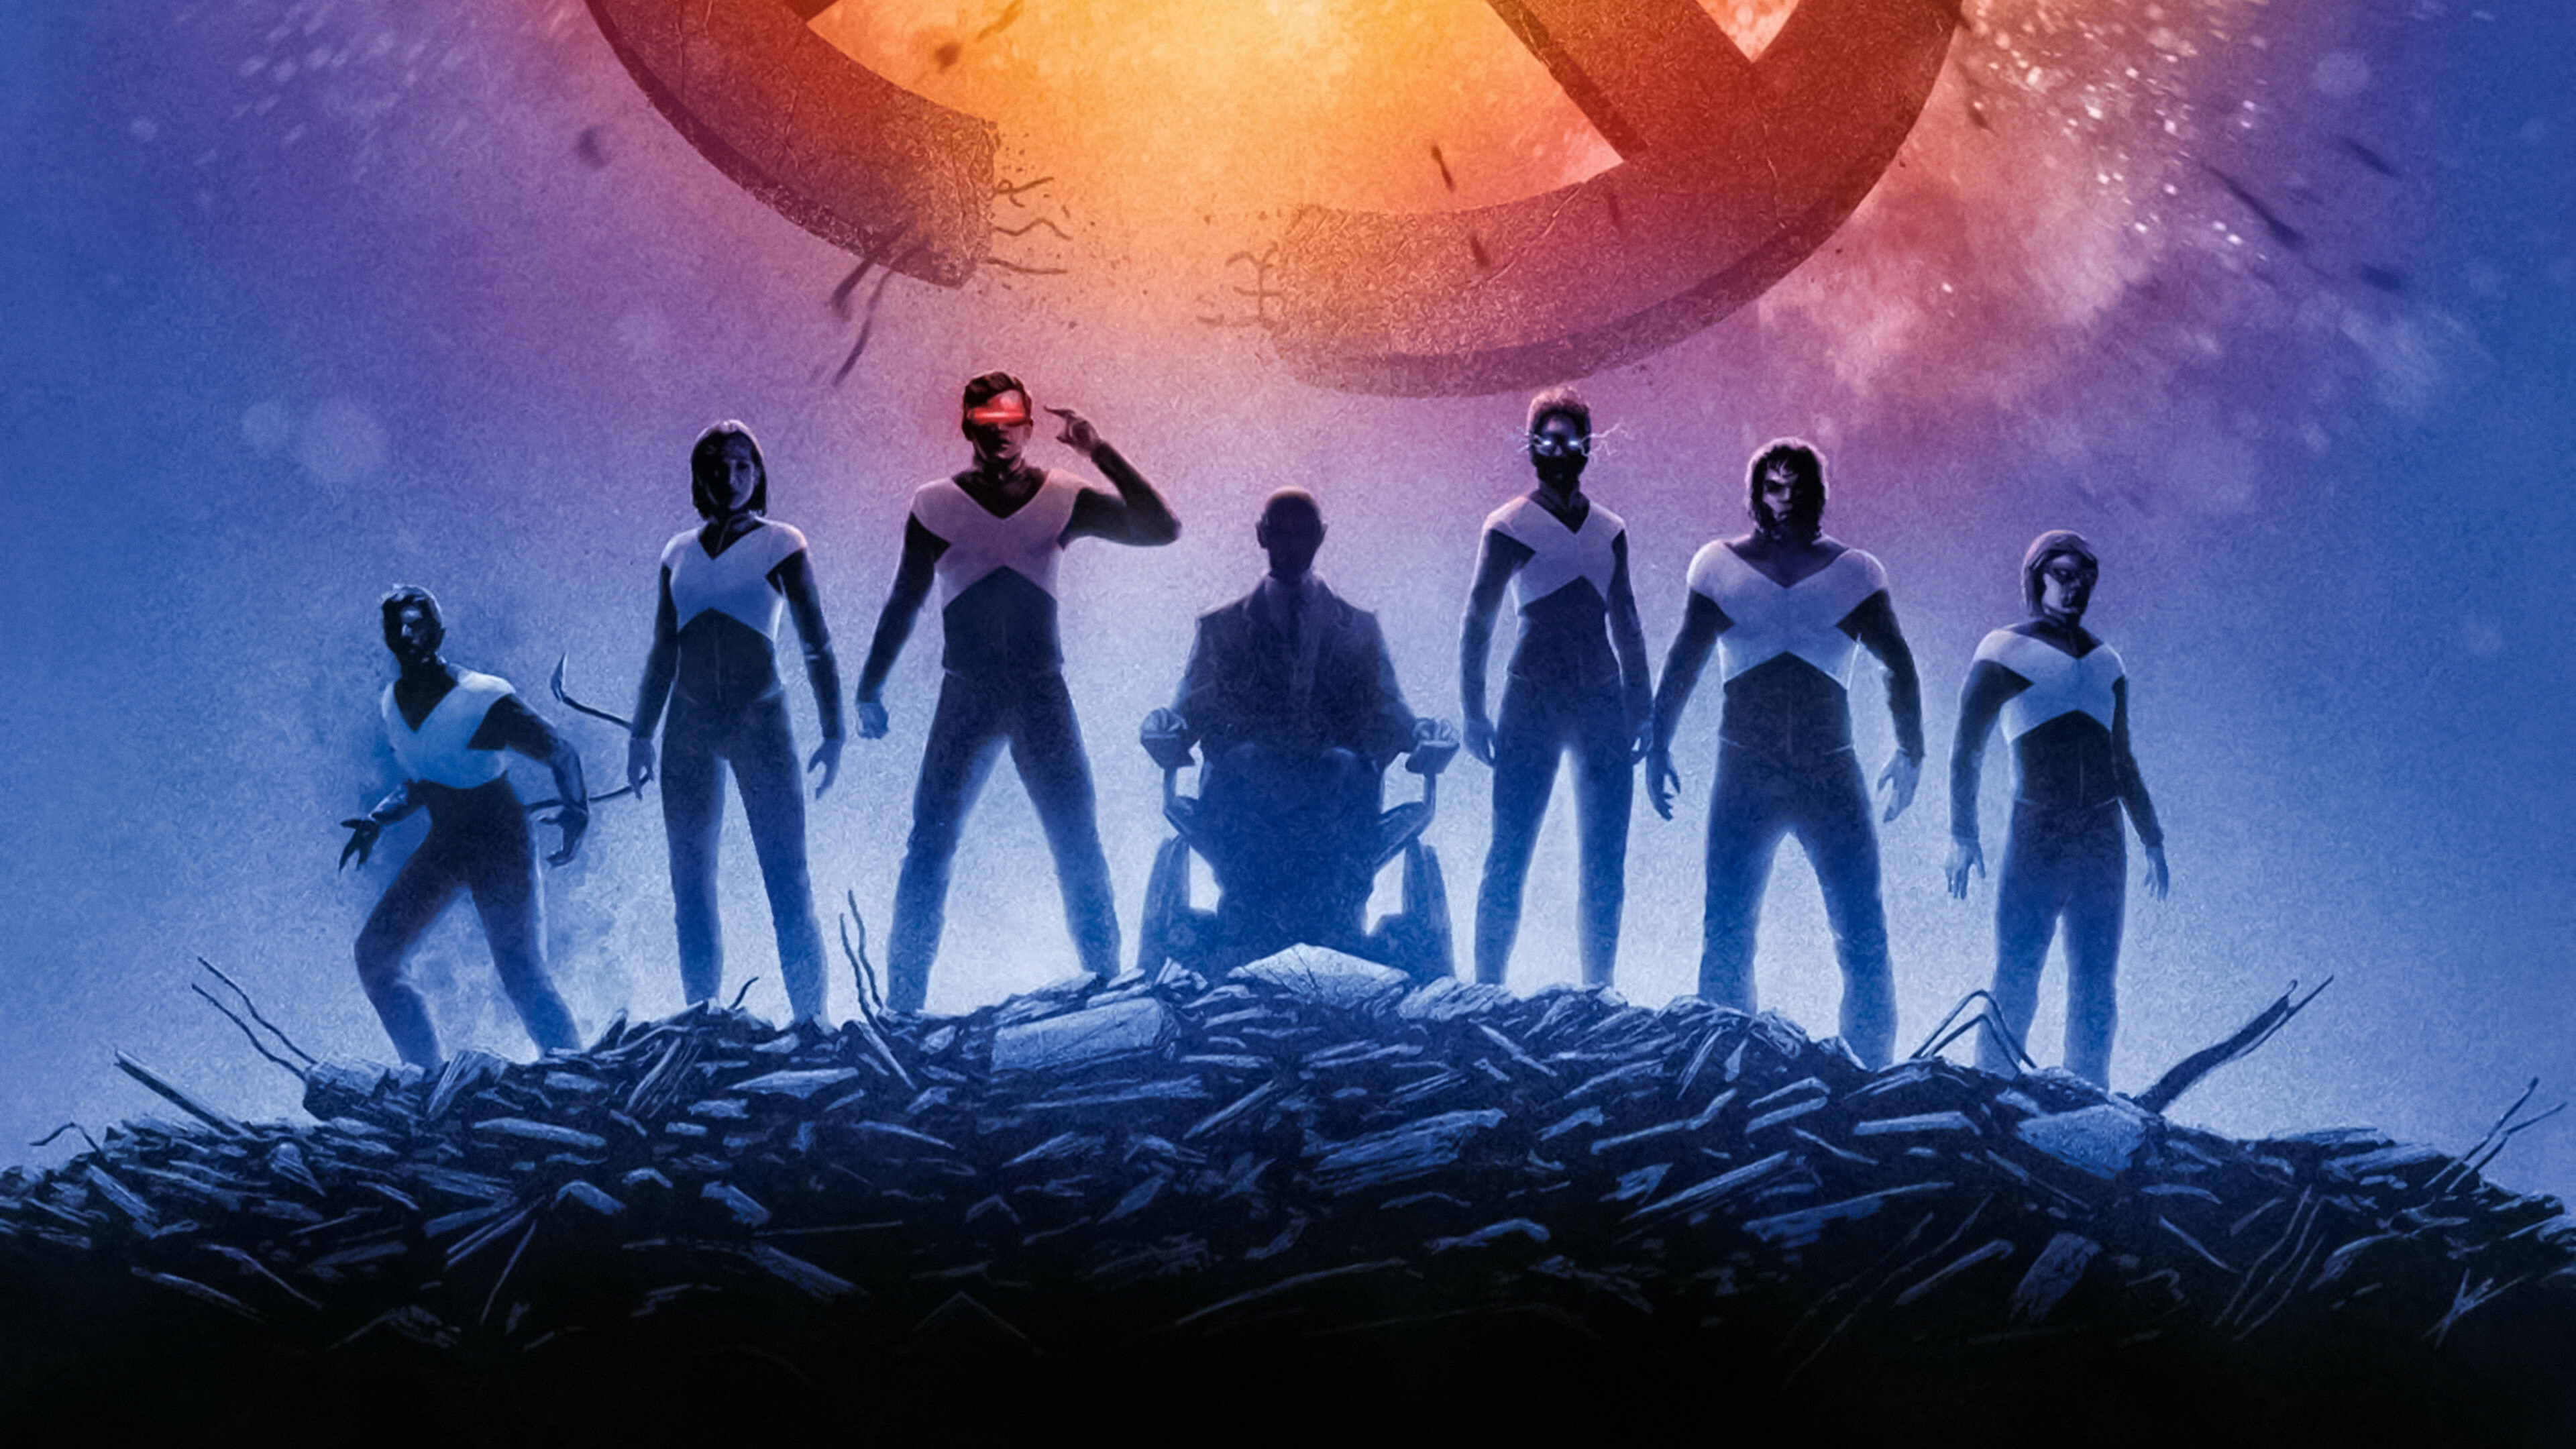 X-Men: Dark Phoenix, A 2019 American superhero film. 3840x2160 4K Wallpaper.